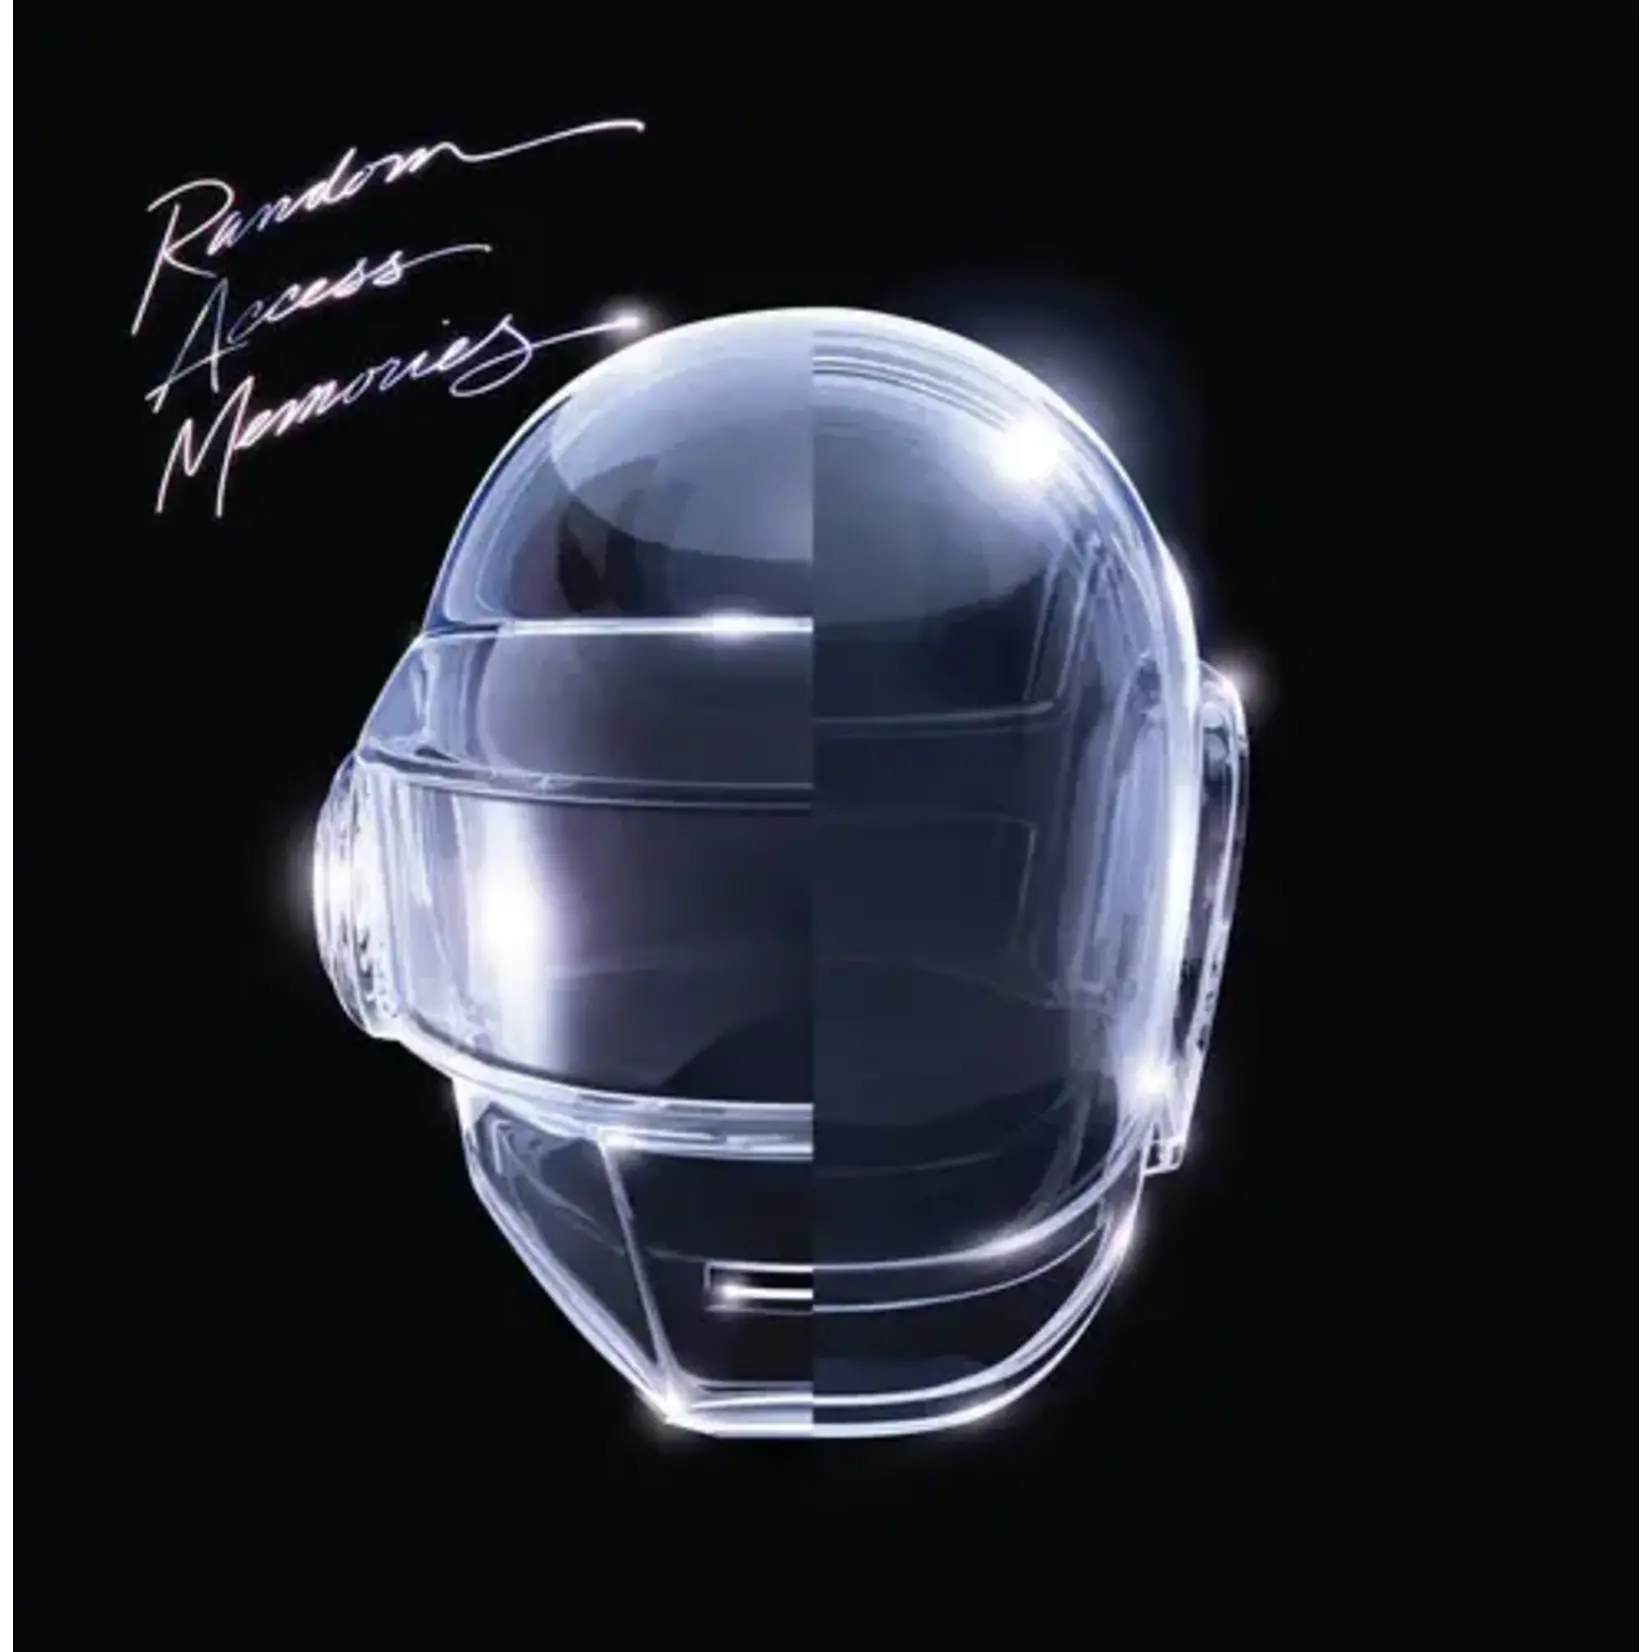 Daft Punk - Random Access Memories (10th Anniversary Edition)